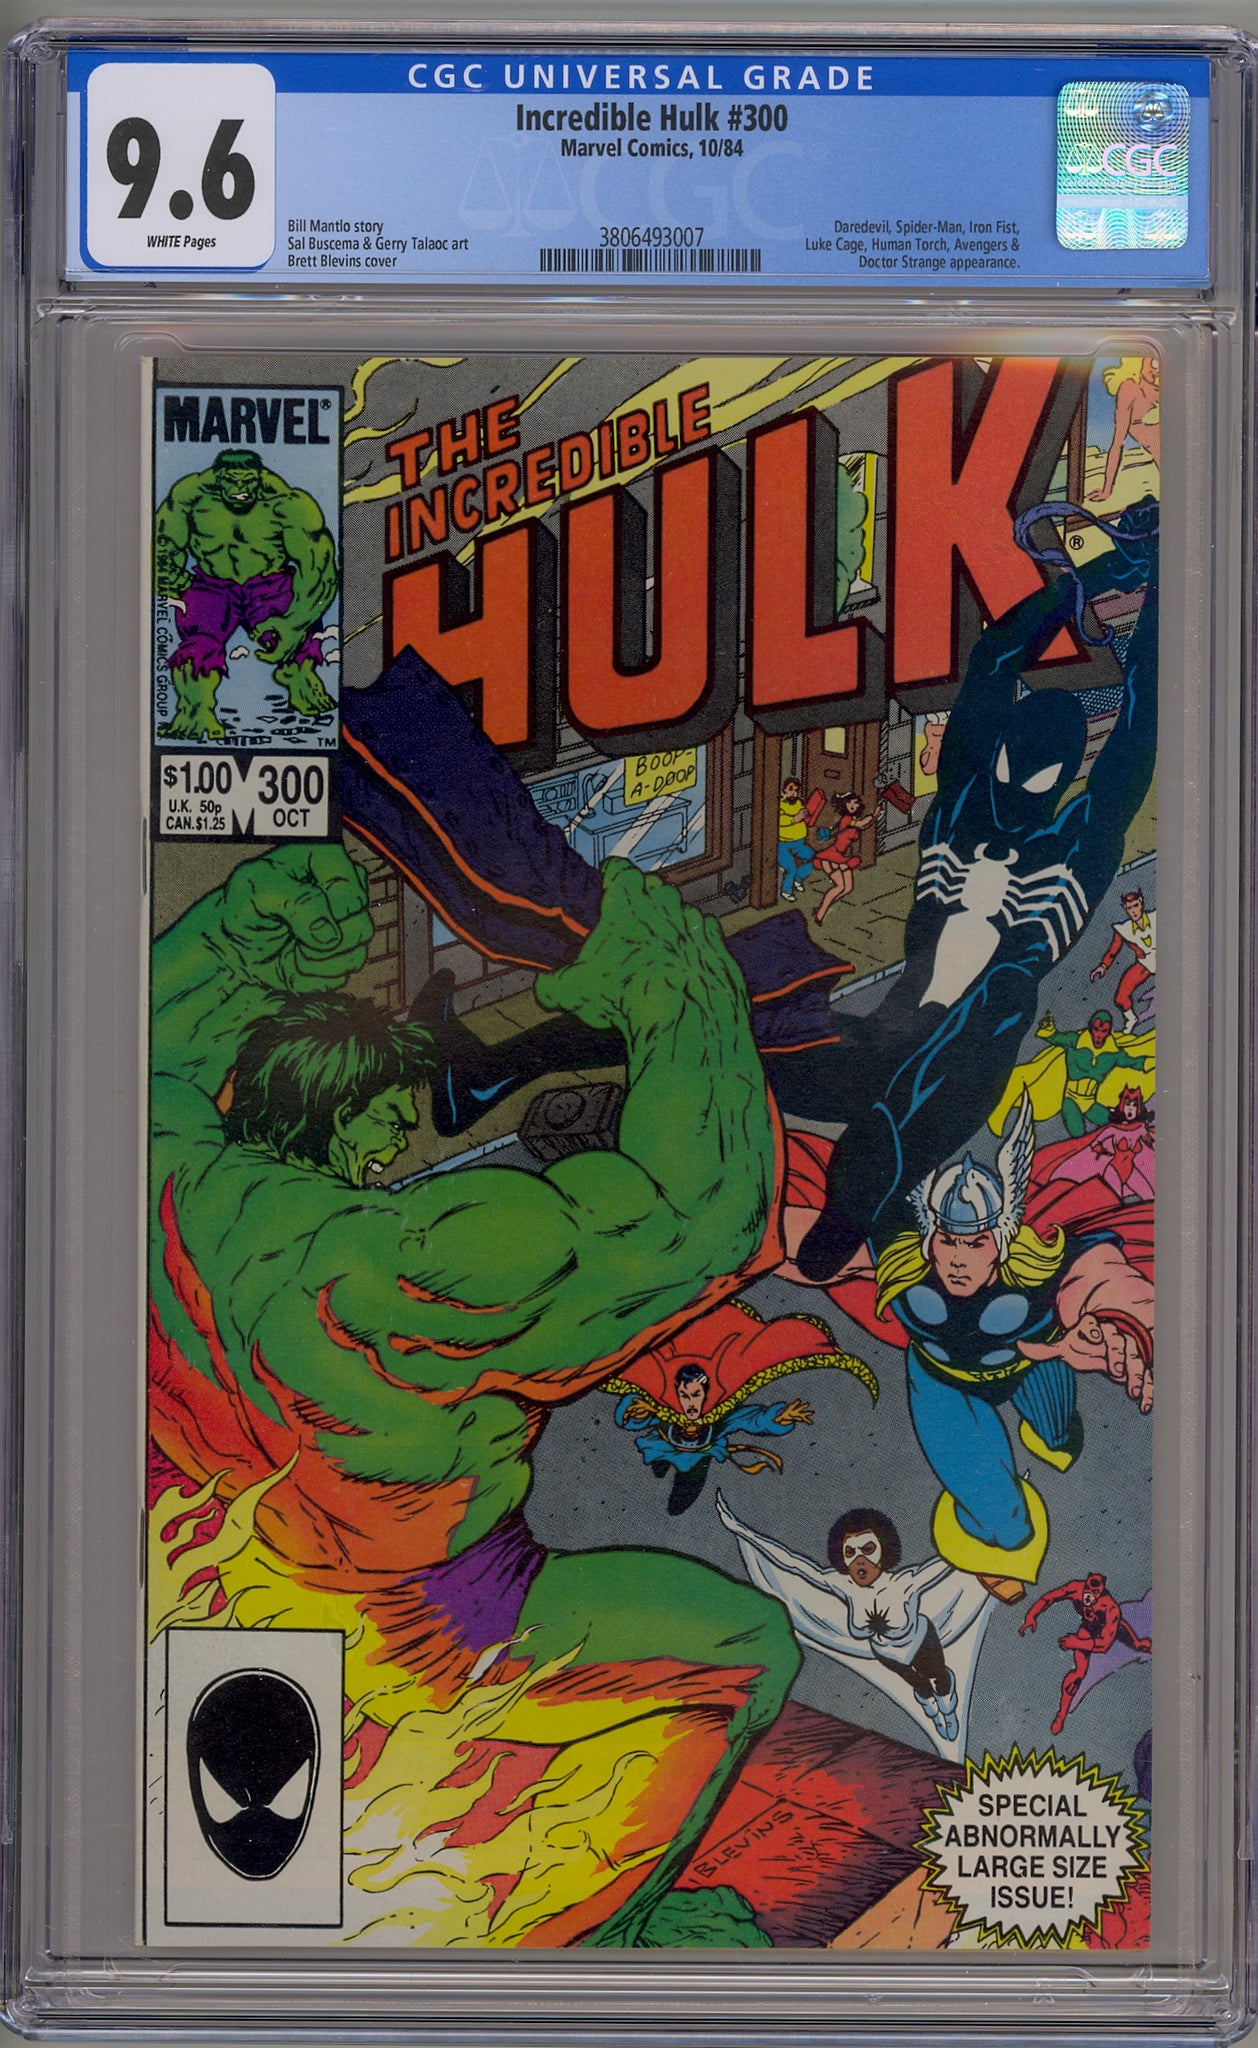 Incredible Hulk #300 (1984) Spider-Man, Avengers, Doctor Strange, Luke Cage, Iron Fist